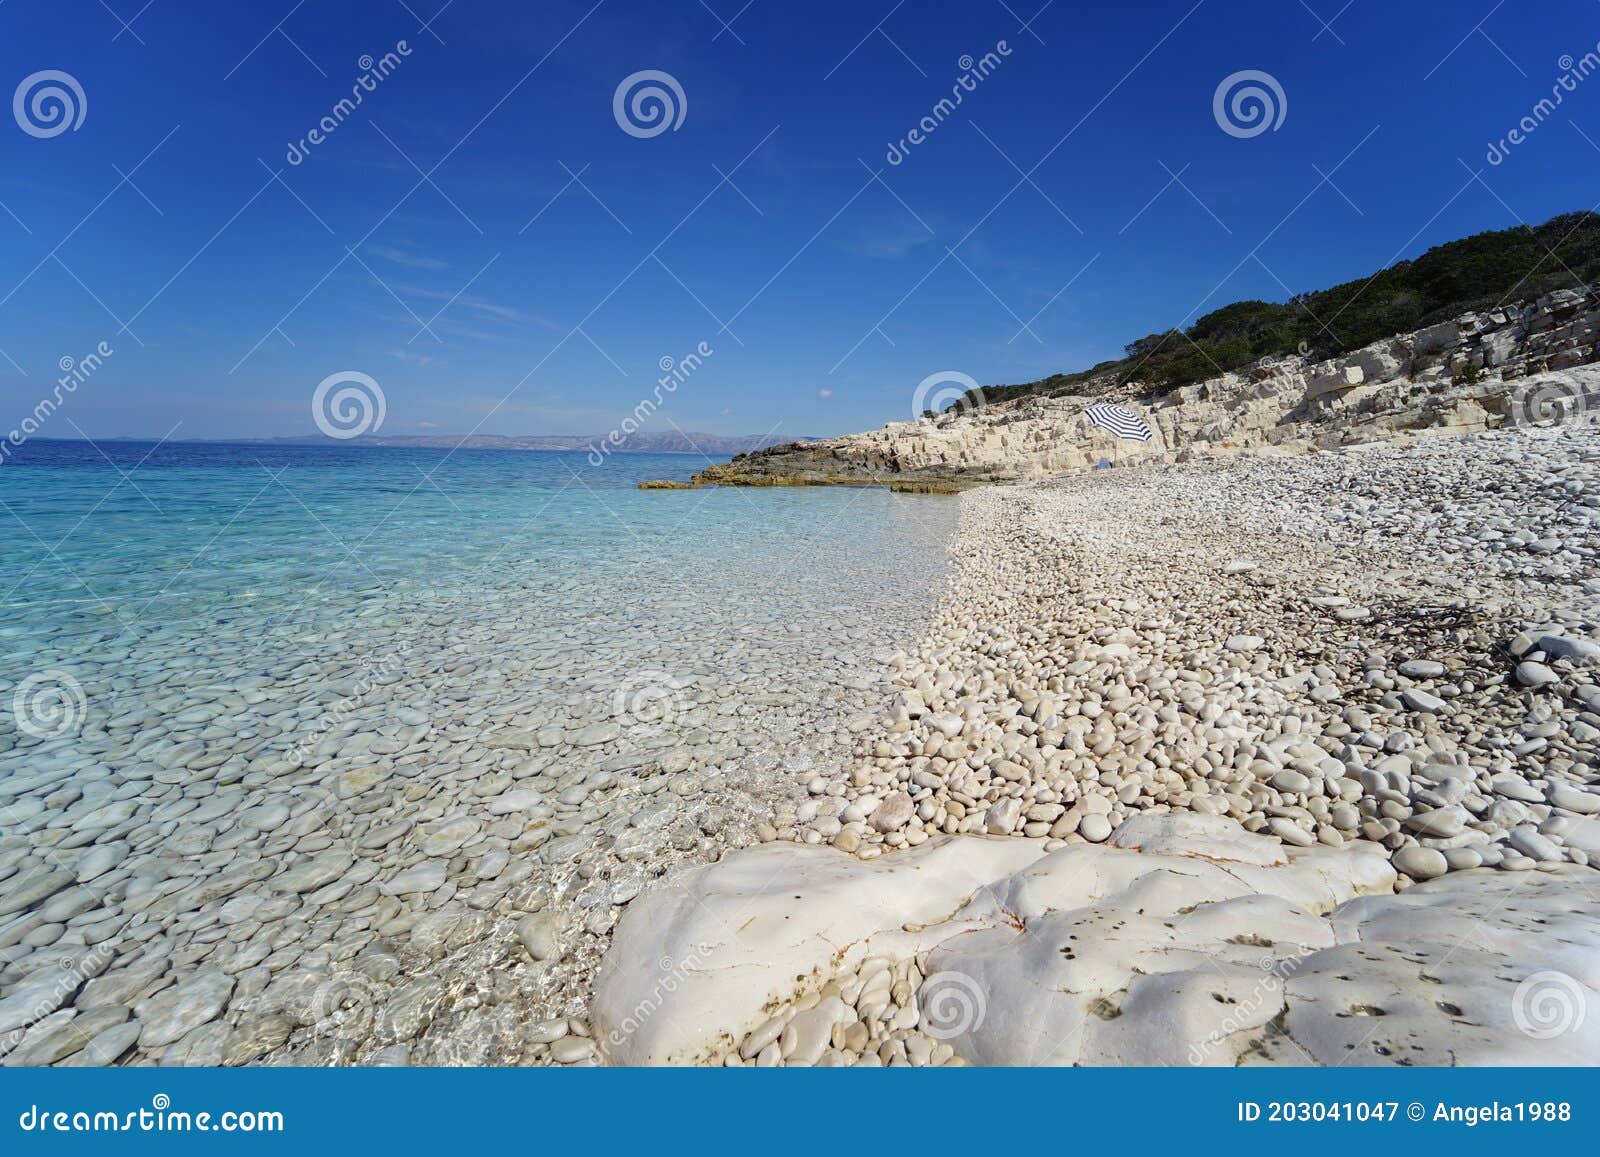 beach on the proizd islet, vela luka - croatia